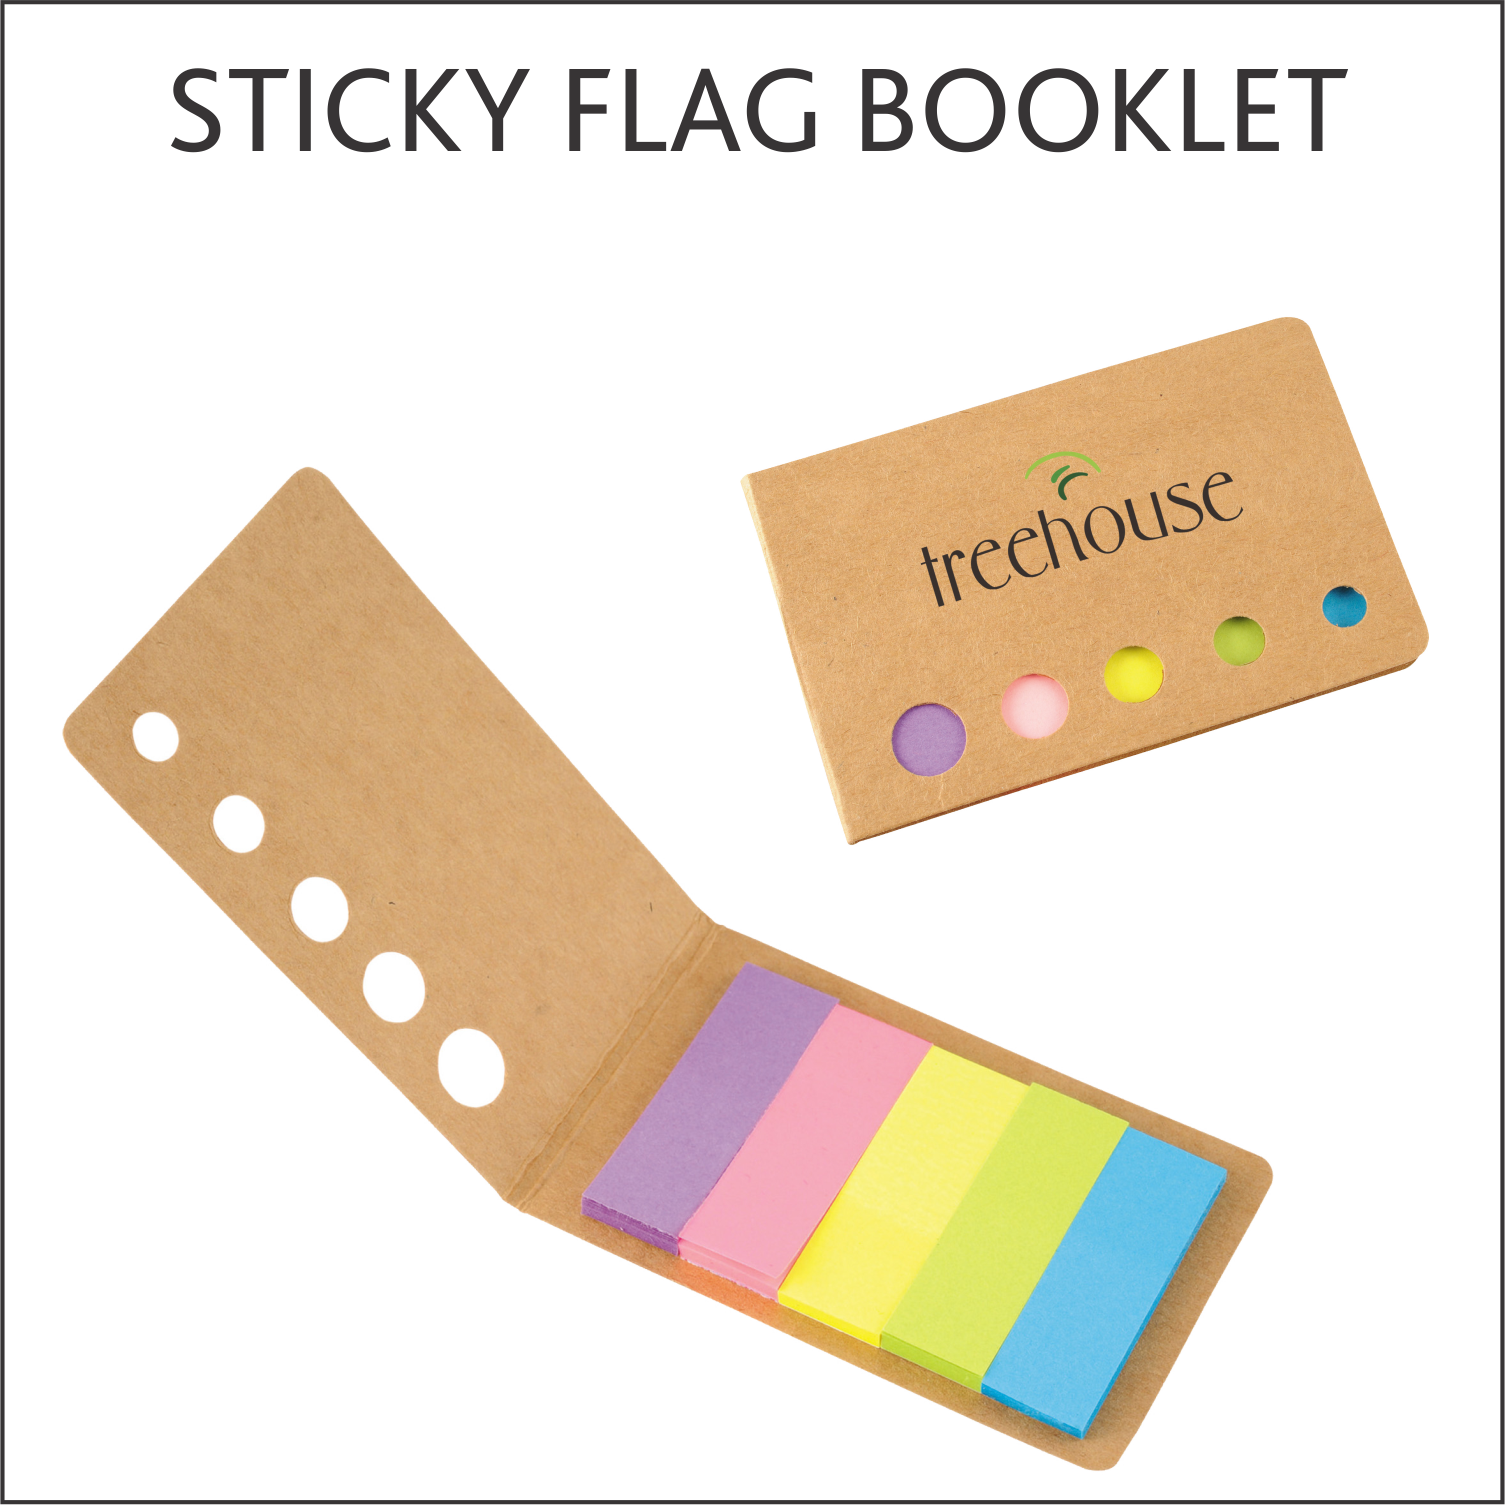 STICKY FLAG BOOKLET.png